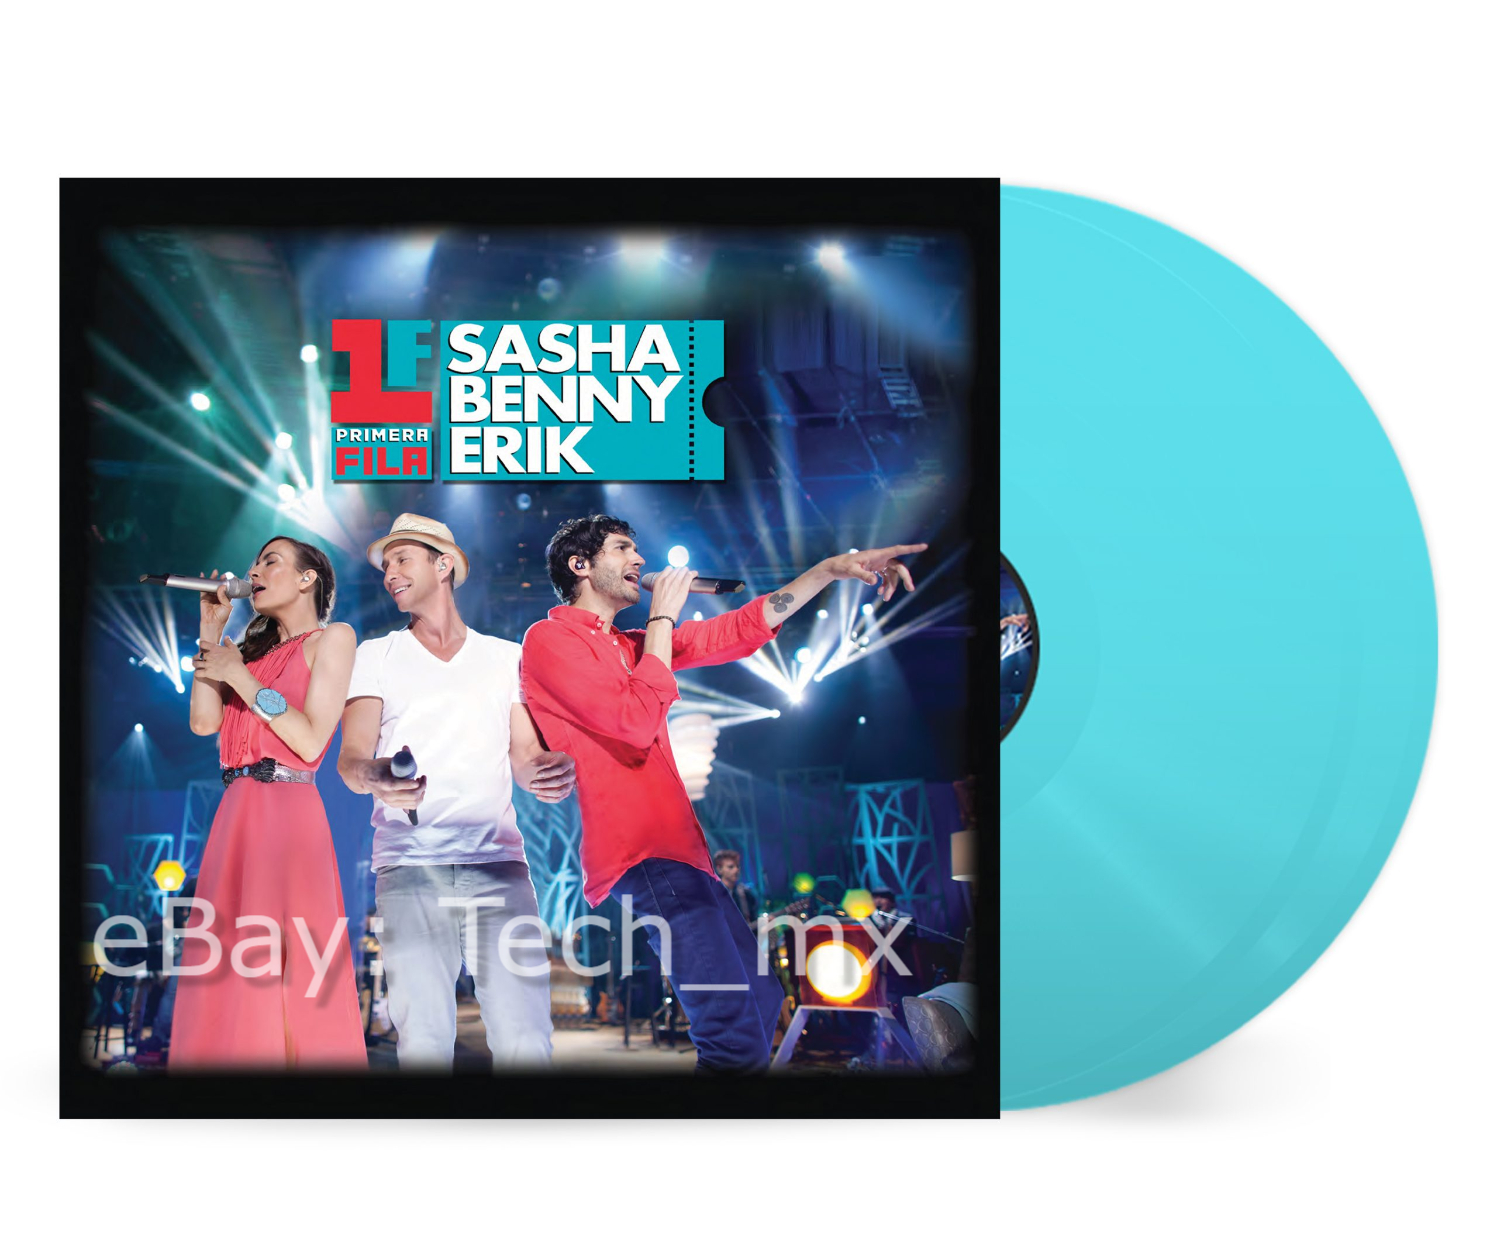 Sasha, Benny y Erik - Primera Fila Vinyl 2LP DVD Color Envio Rapido Gratis USA